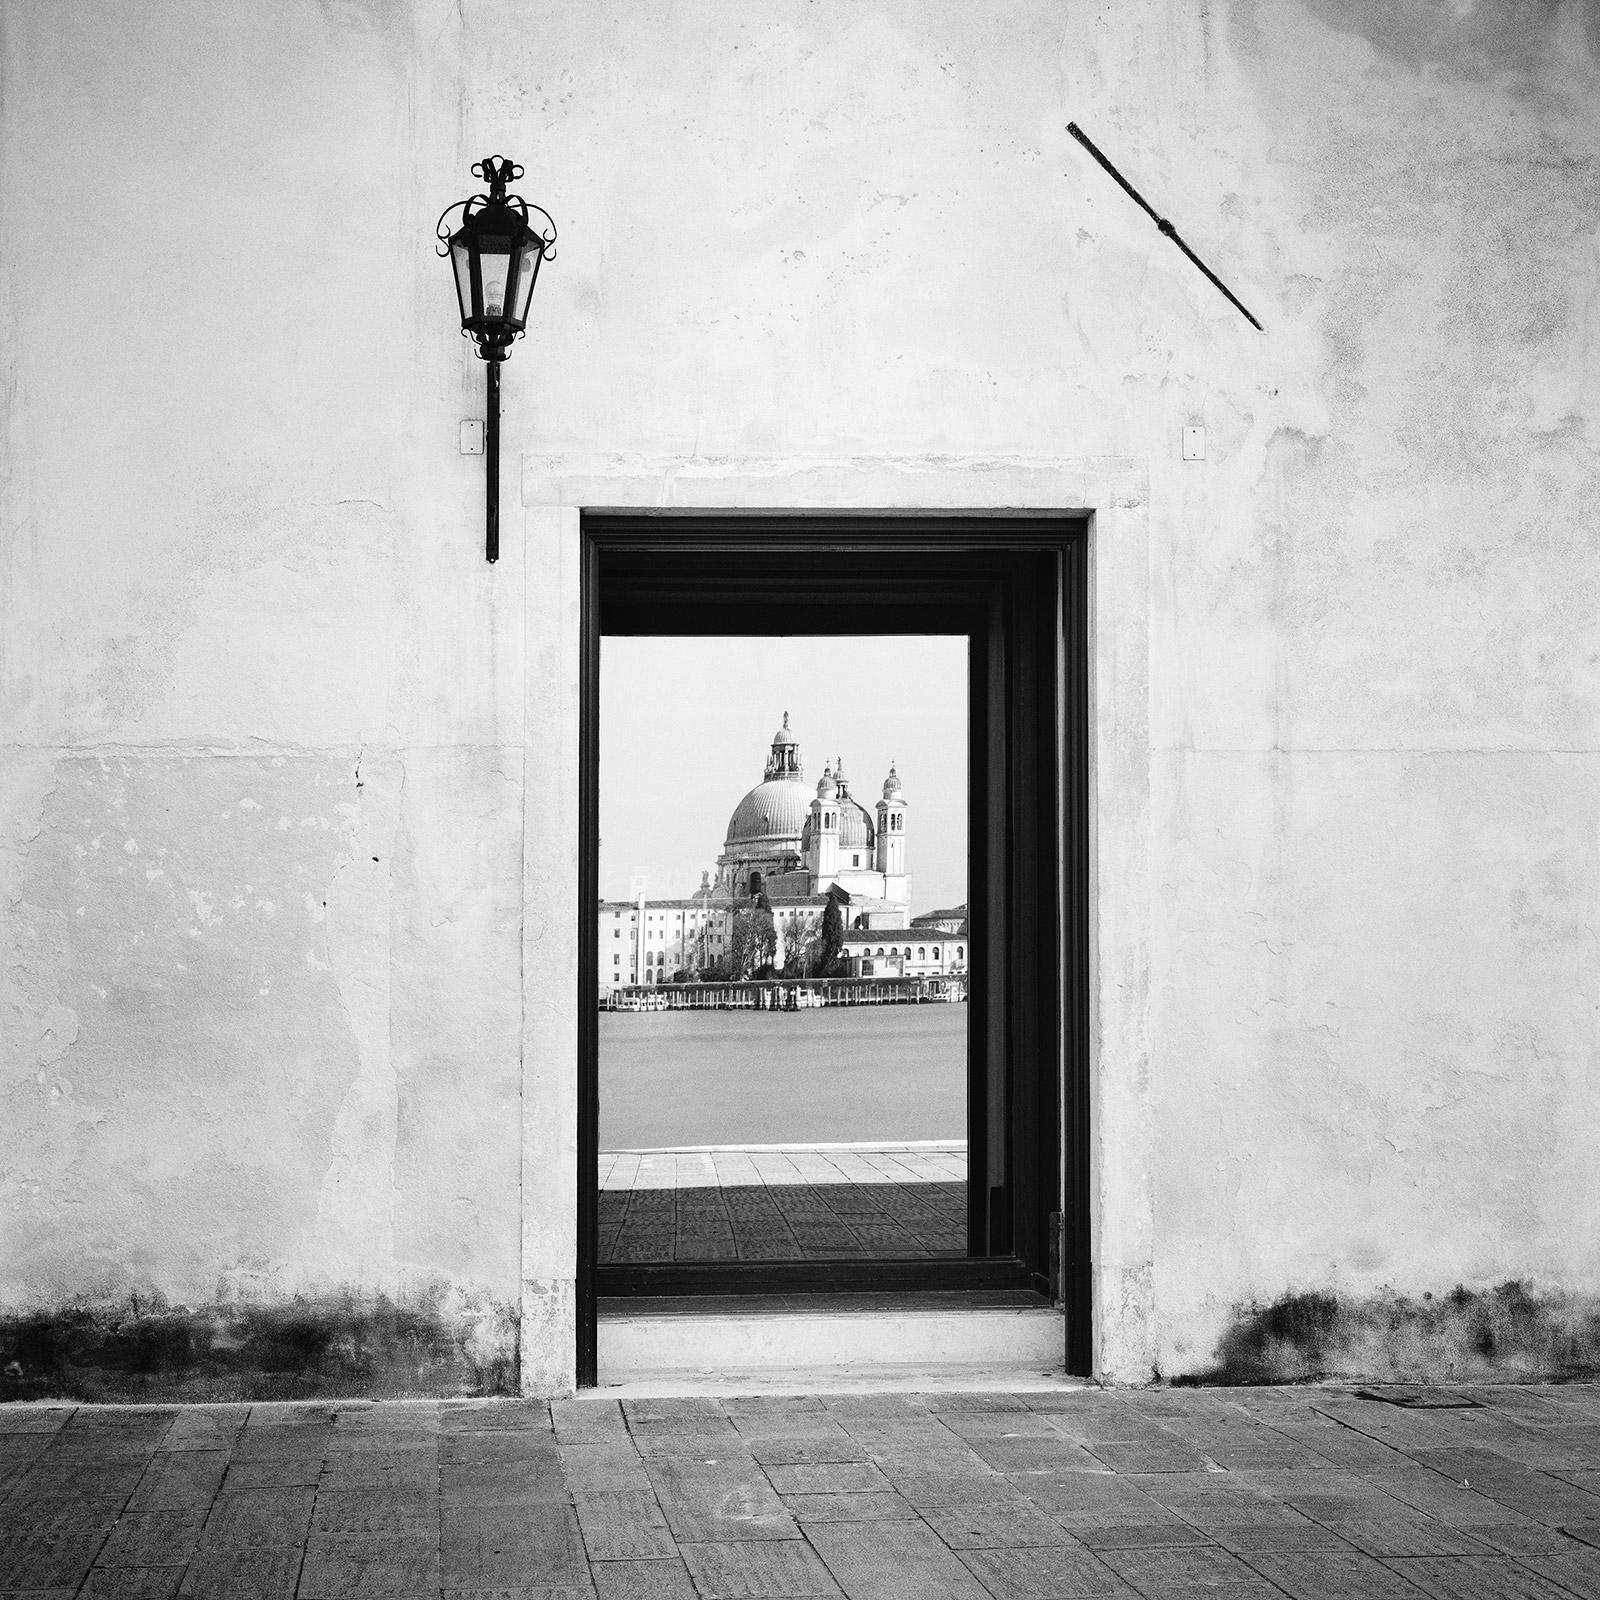 Gerald Berghammer Landscape Photograph - Reflection, Venice, Italy, black and white fine art landscape photography print